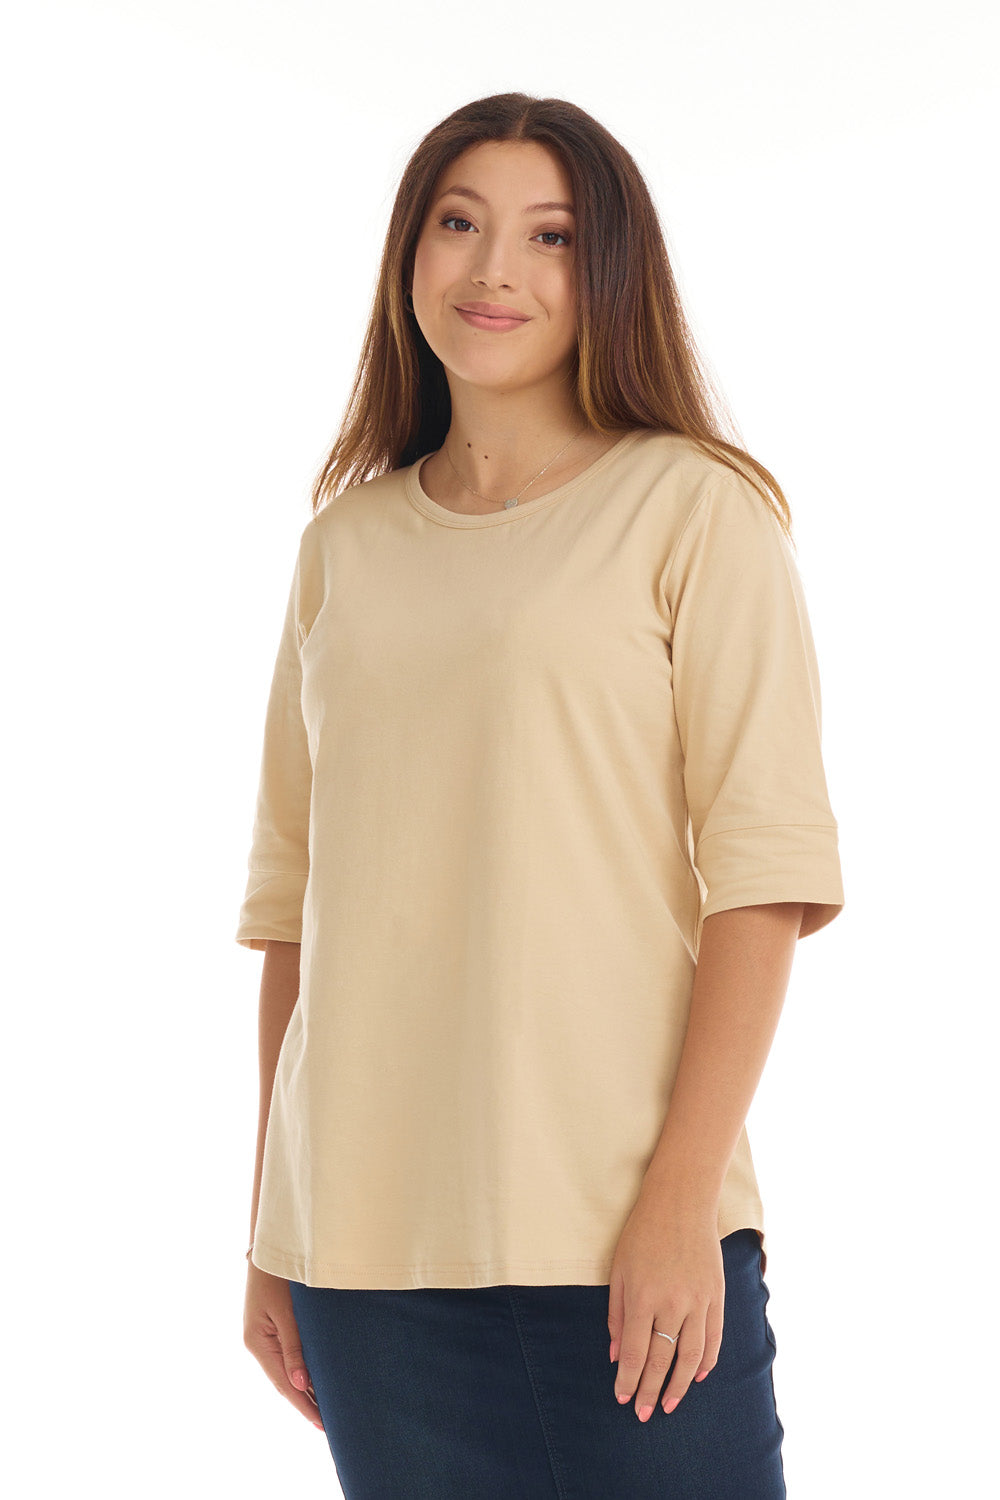 Elbow Sleeve Cotton Tunic T-Shirt Top EX801261